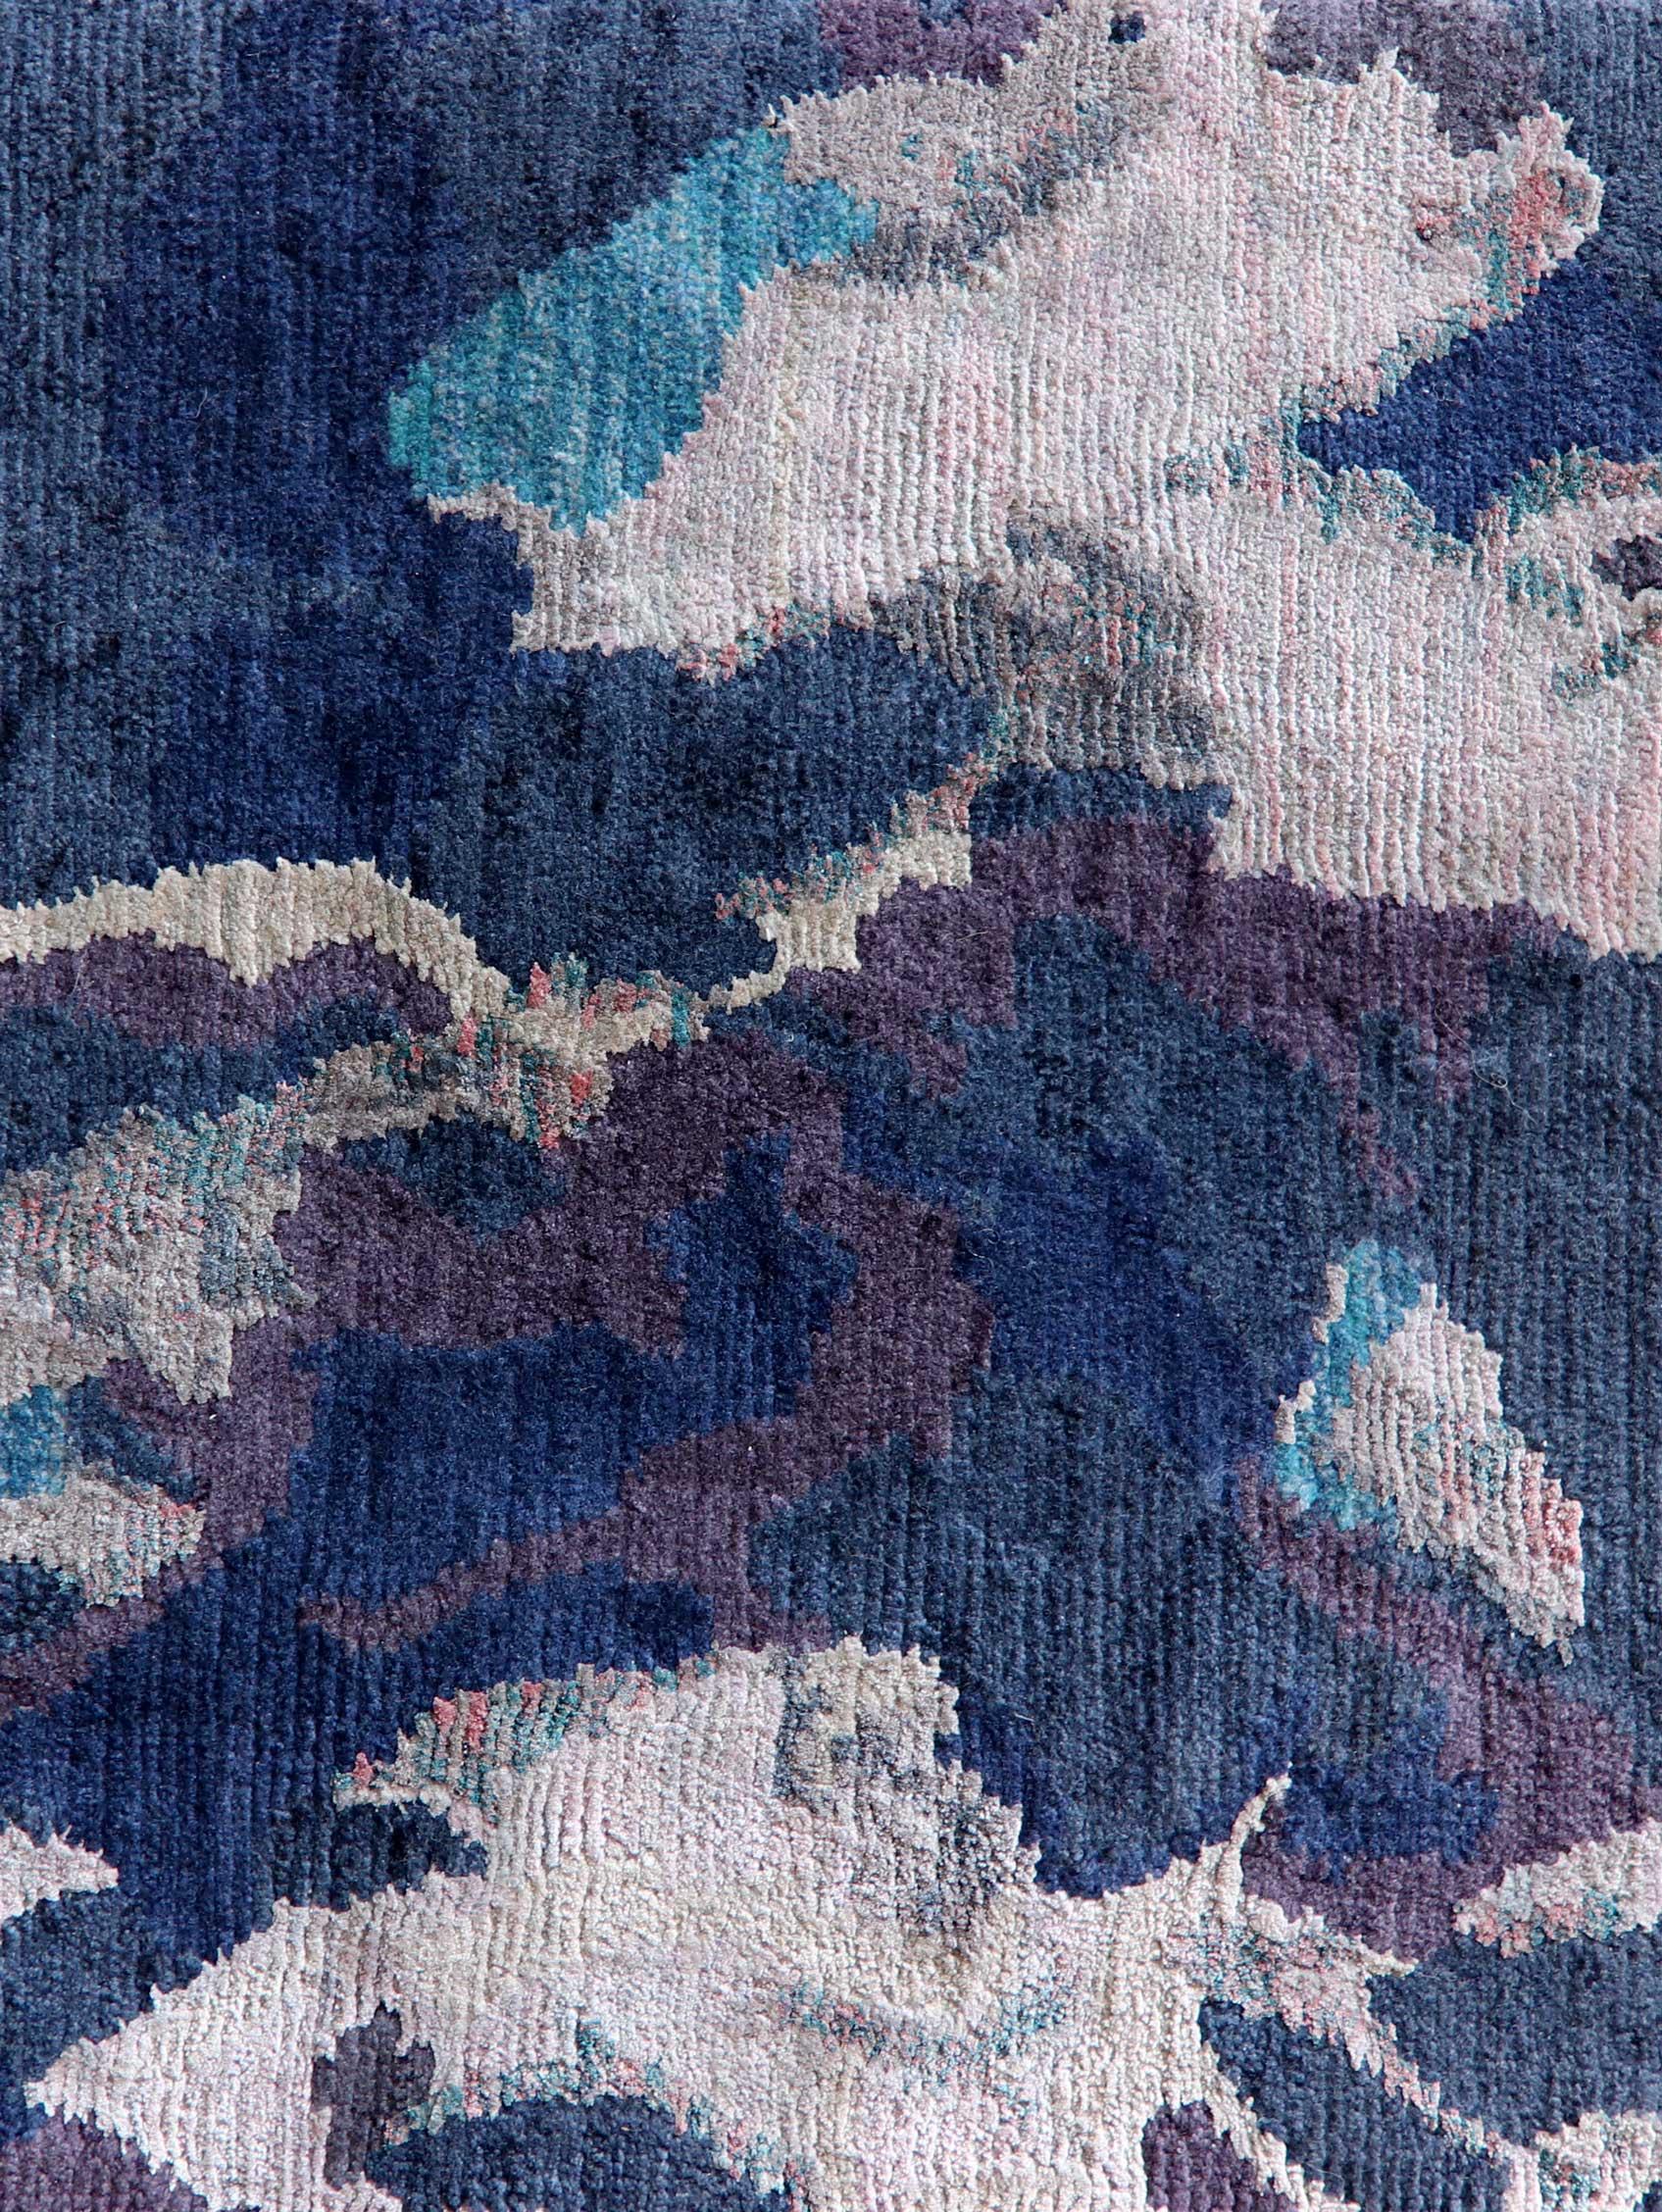 Rug pattern: Huerfano - Navy
Material: 50% Merino Wool / 50% Silk
Quality: Tibetan Cross Weave, handwoven 
Size: 9’-0